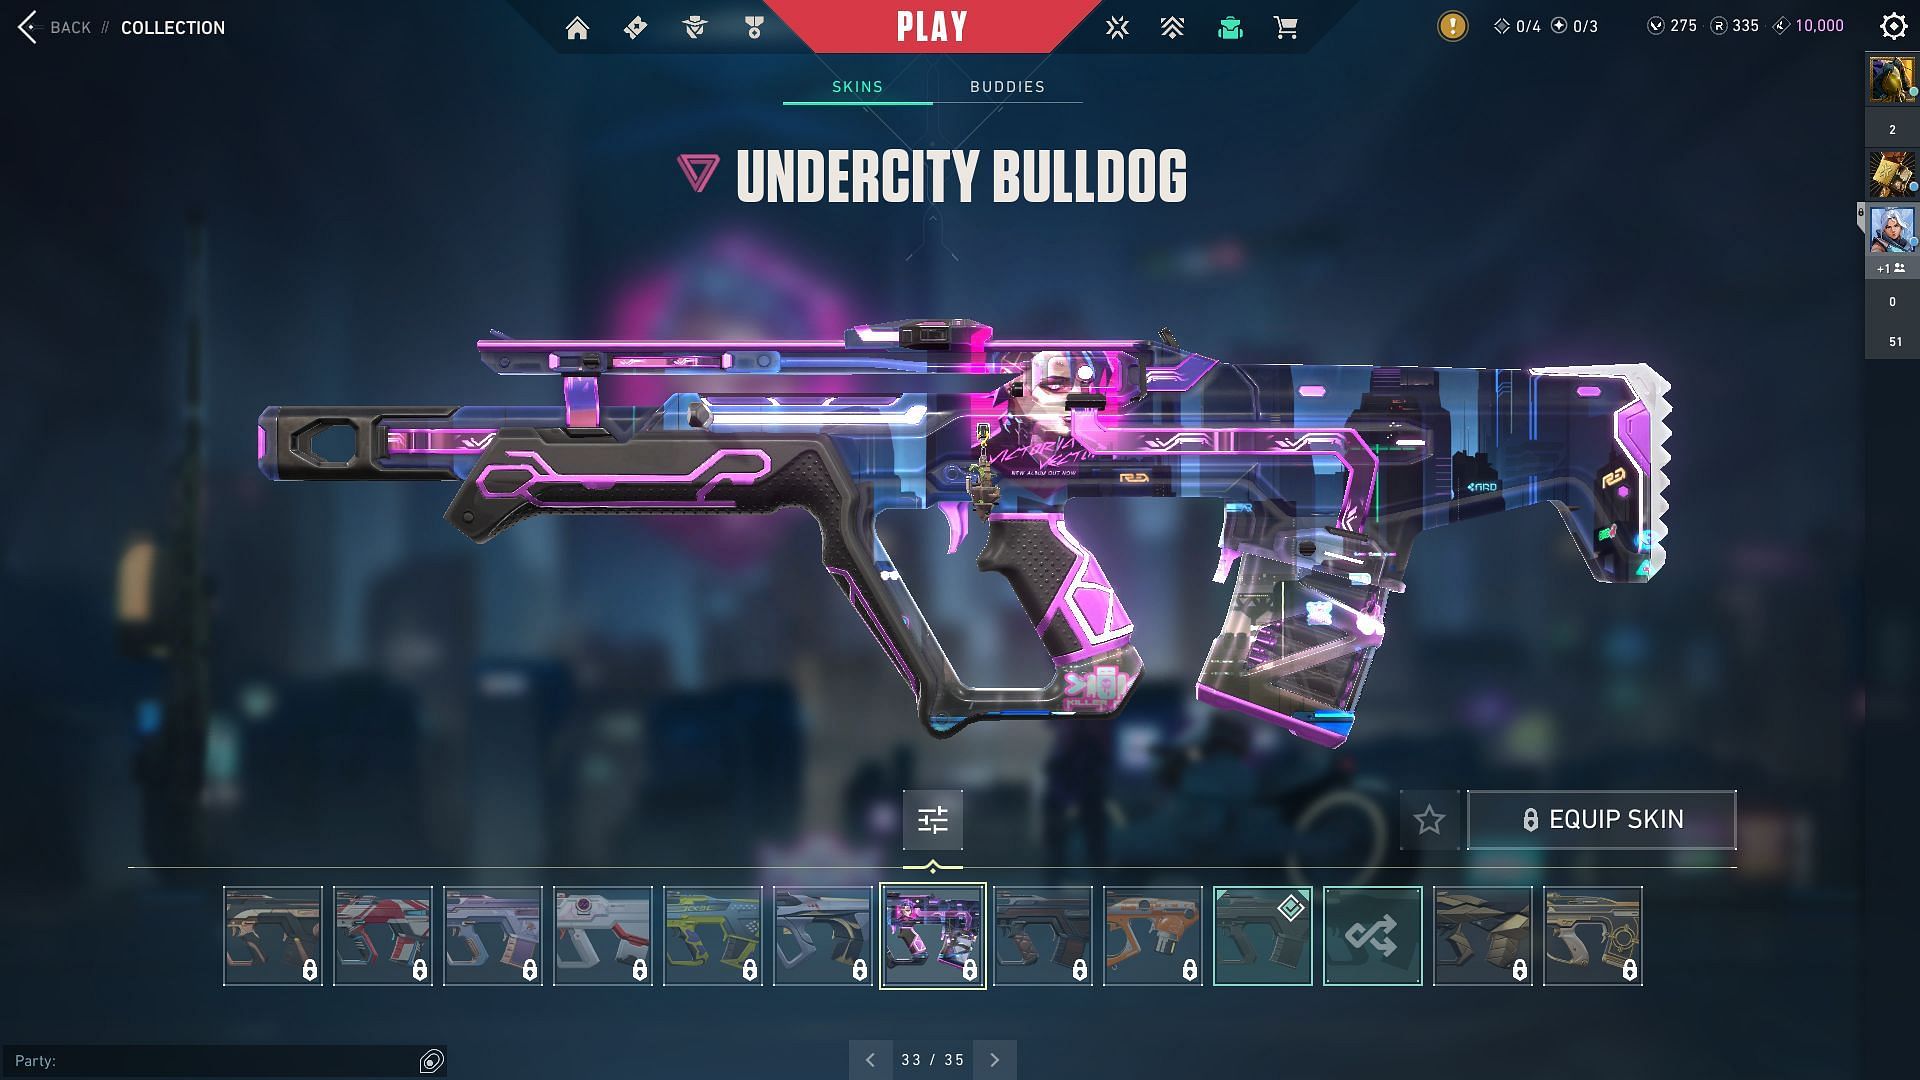 Undercity Bulldog (Image via Sportskeeda and Riot Games)